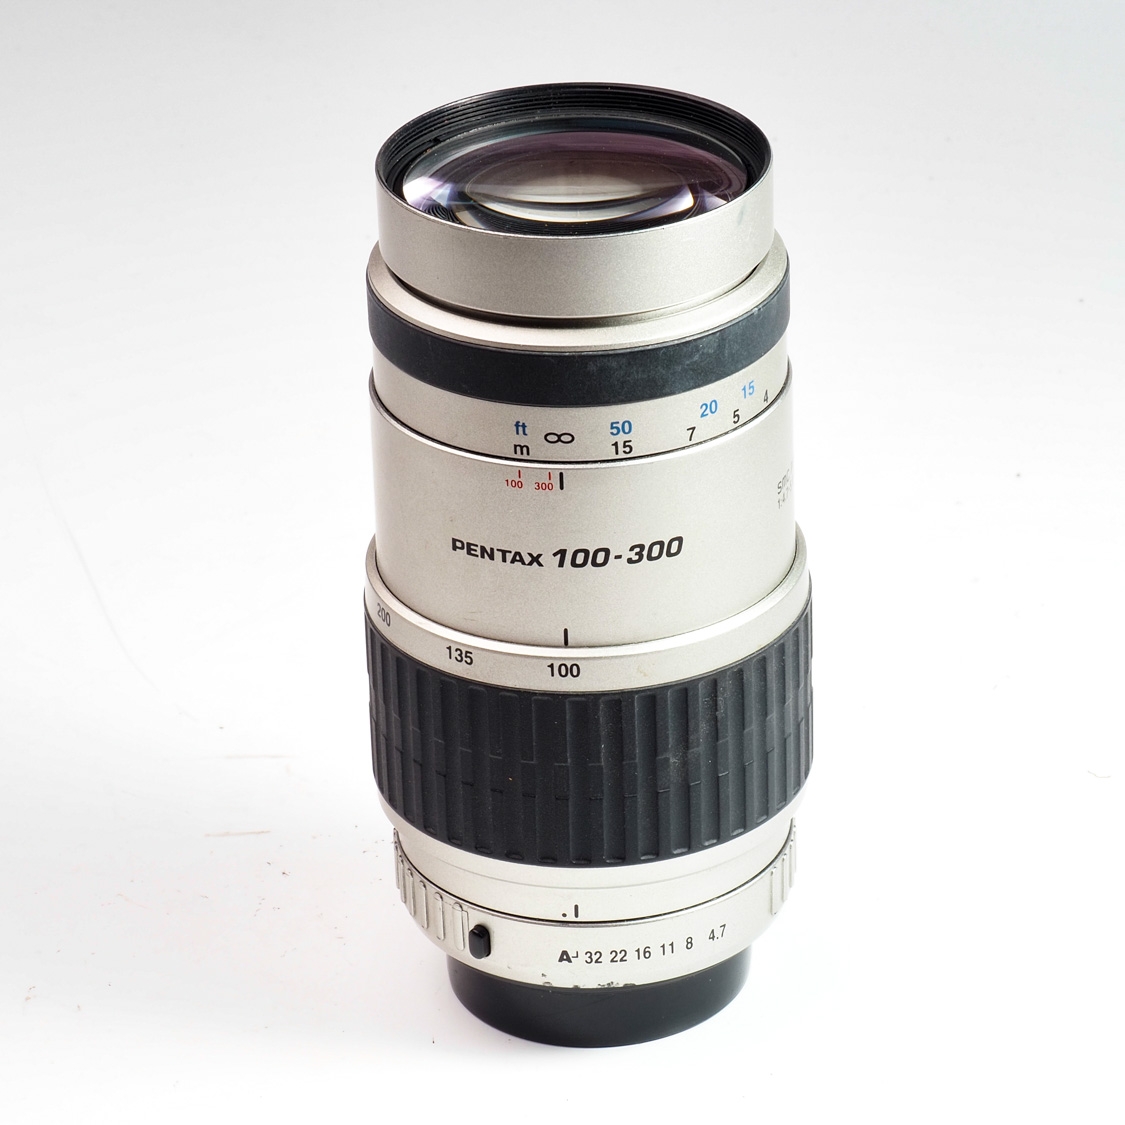 Pentax FA 100-300mm F4.7-5.8 (BGN) Used Lens